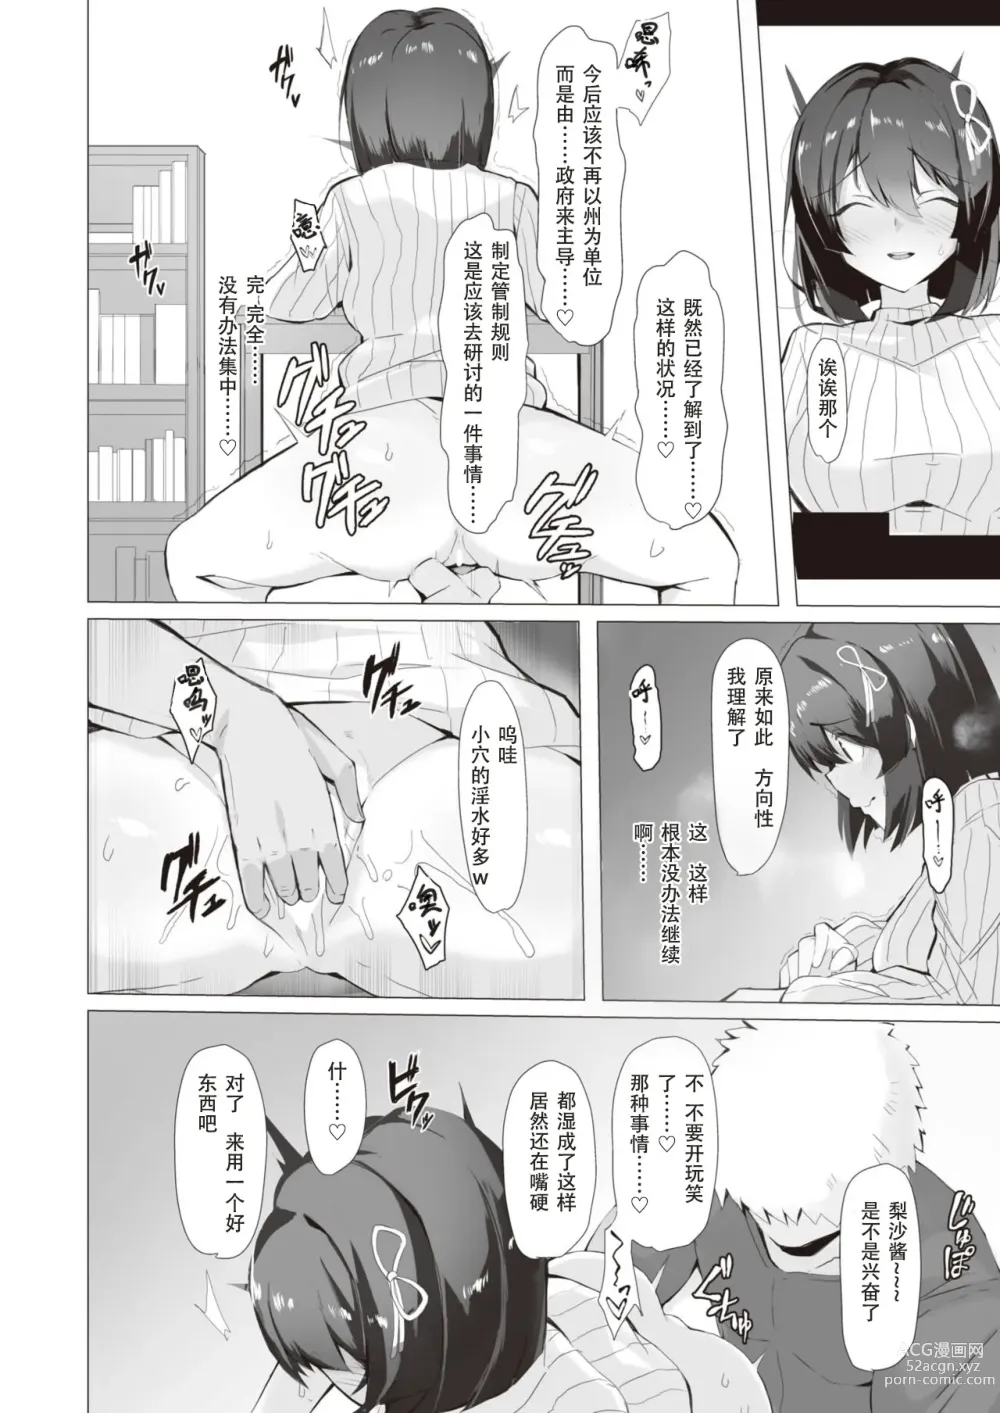 Page 8 of manga Koujimaooshi - Study or Fuck?